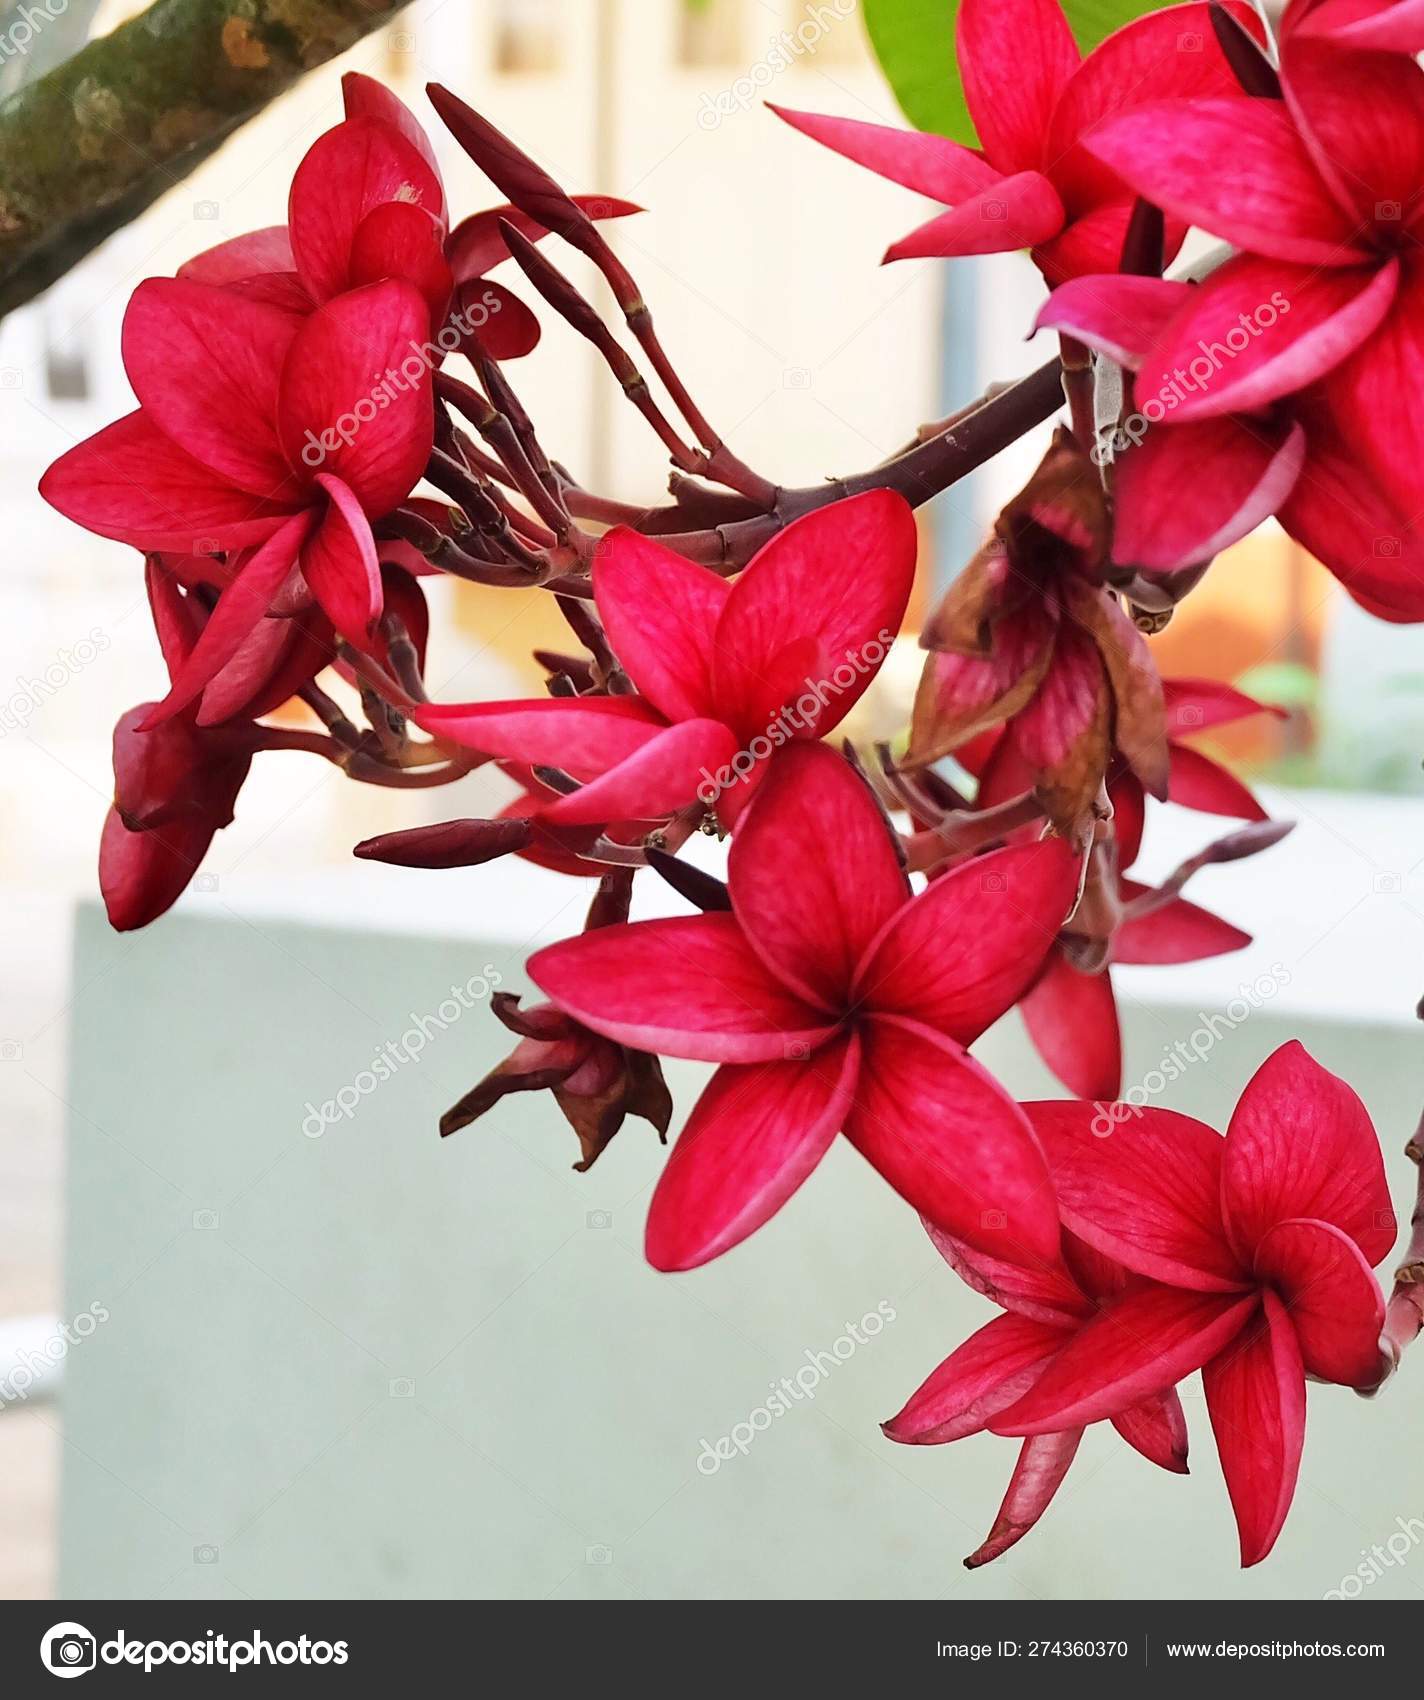 Group Of Beauty Red Plumeria Frangipanis Flowers Stock Photo C Arayabandit 274360370